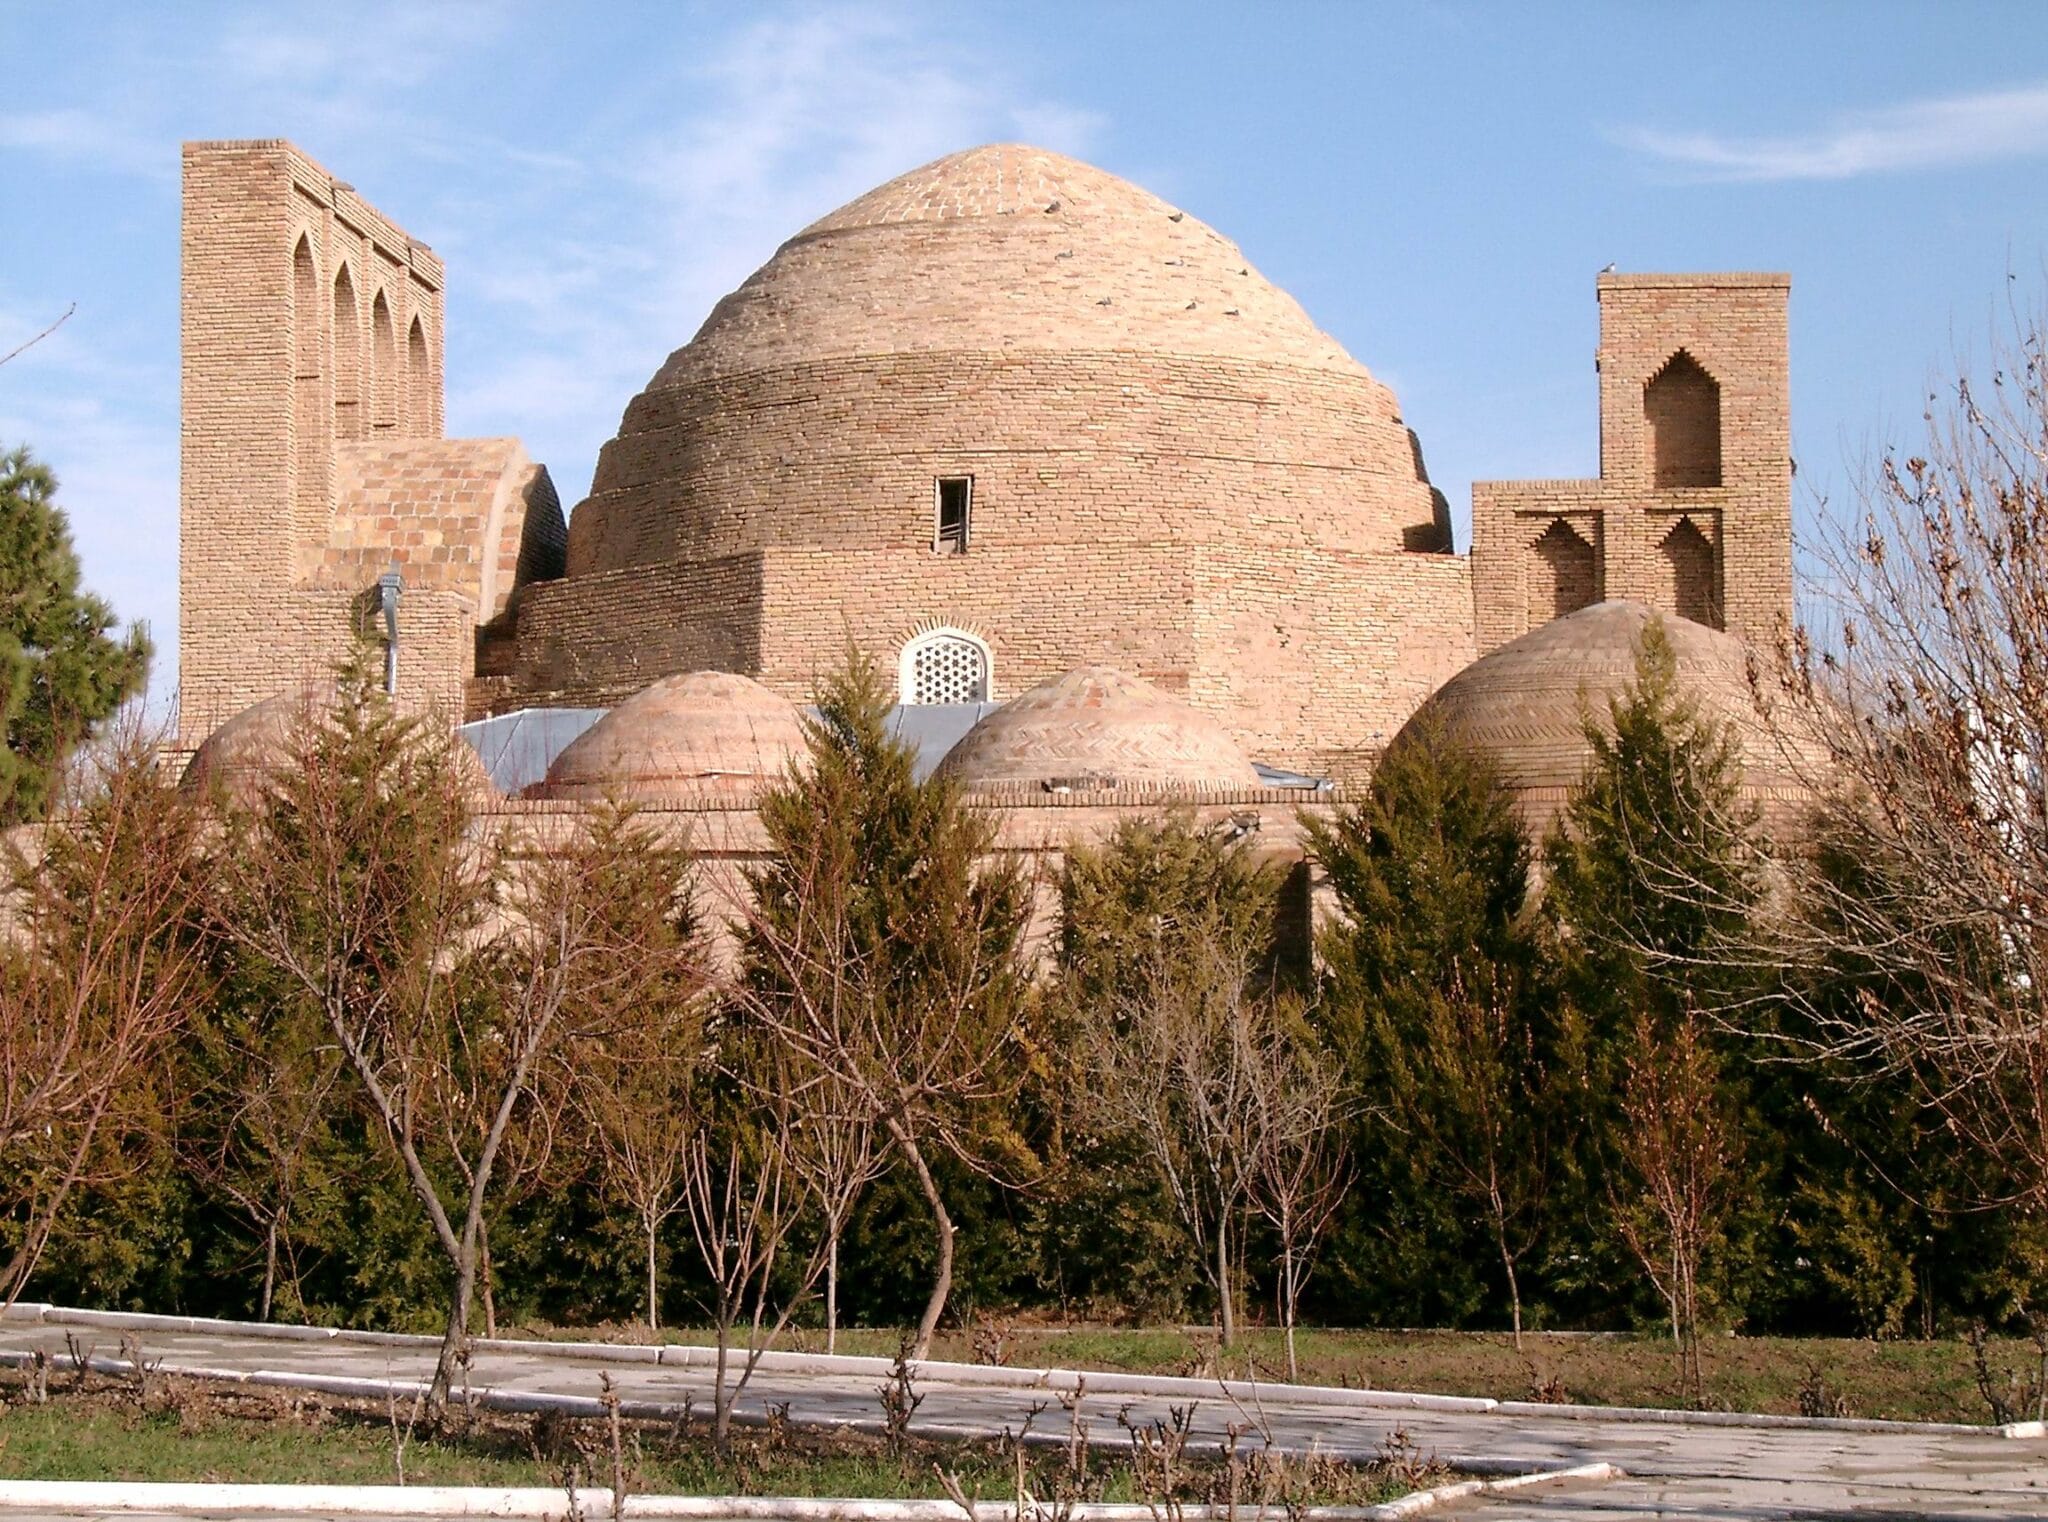 Khakim-at-Termezi complex near Termez